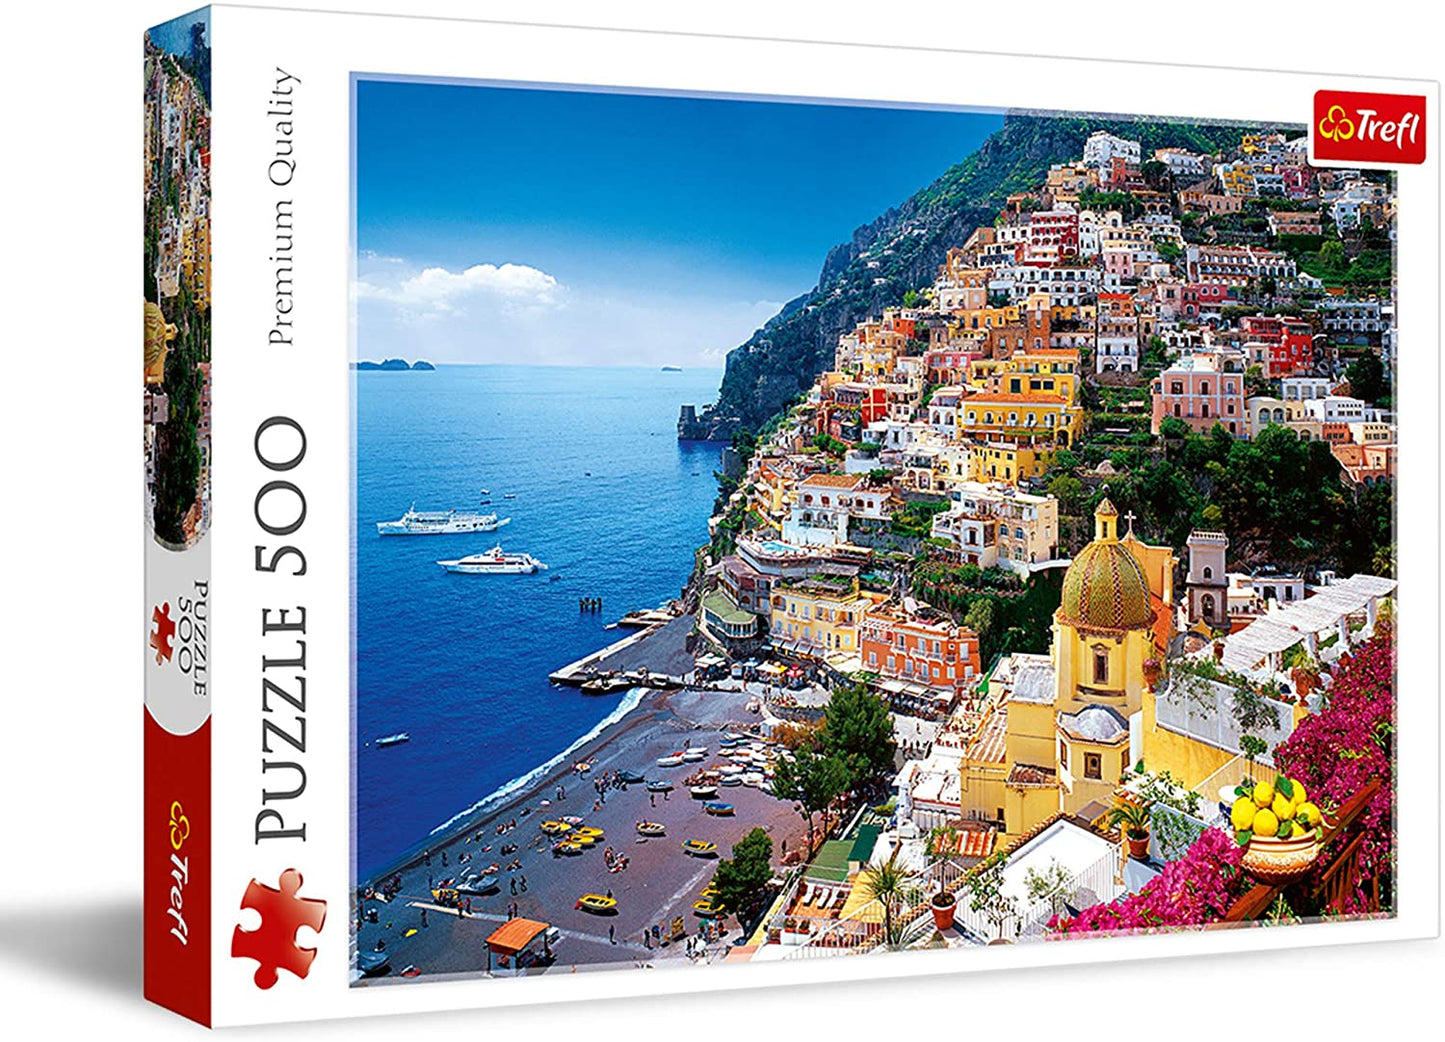 Trefl - Positano, Italy - 500 piece jigsaw puzzle